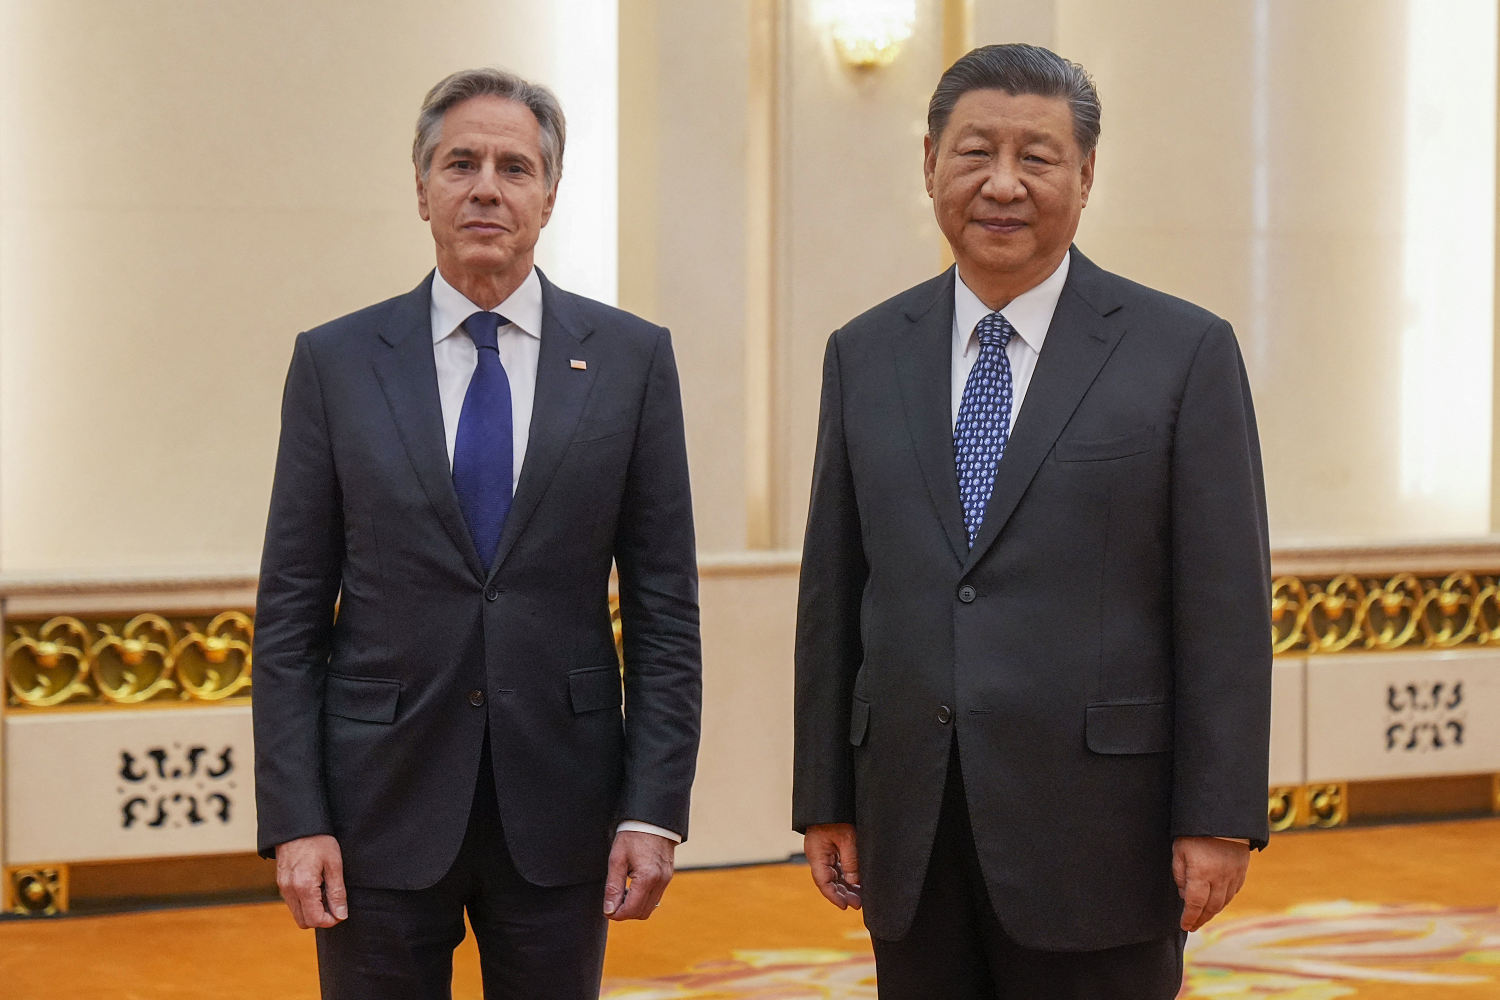 China warns U.S. of 'downward spiral' as Antony Blinken meets with Xi Jinping